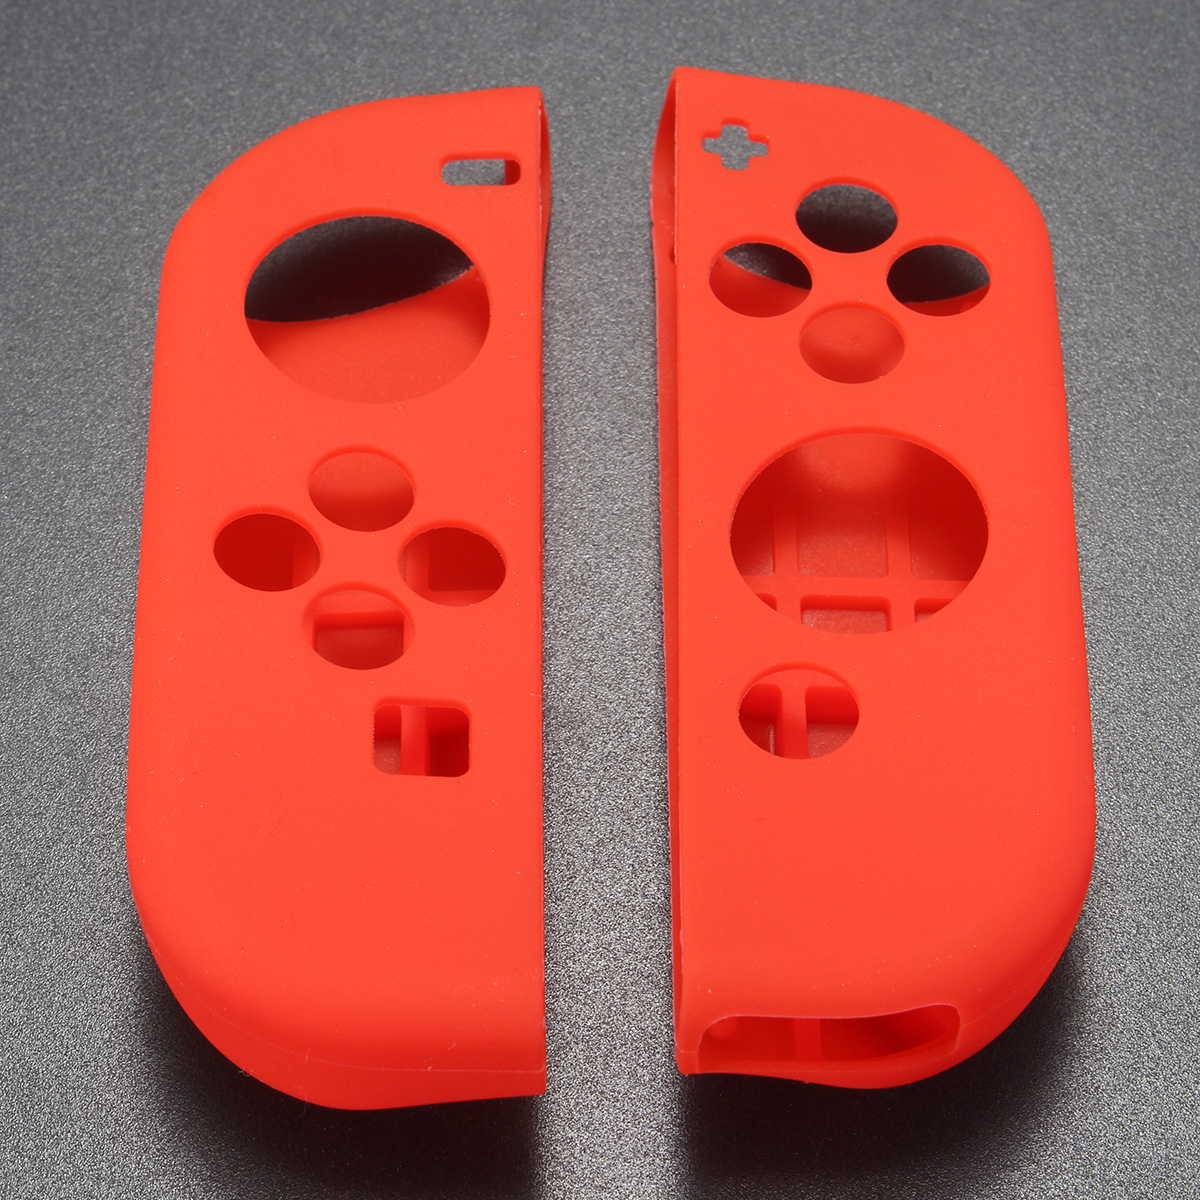 Silicon Case Protective Impact Resistant Rubber Skin Cover For Nintendo Switch Joy-Con Controller 28